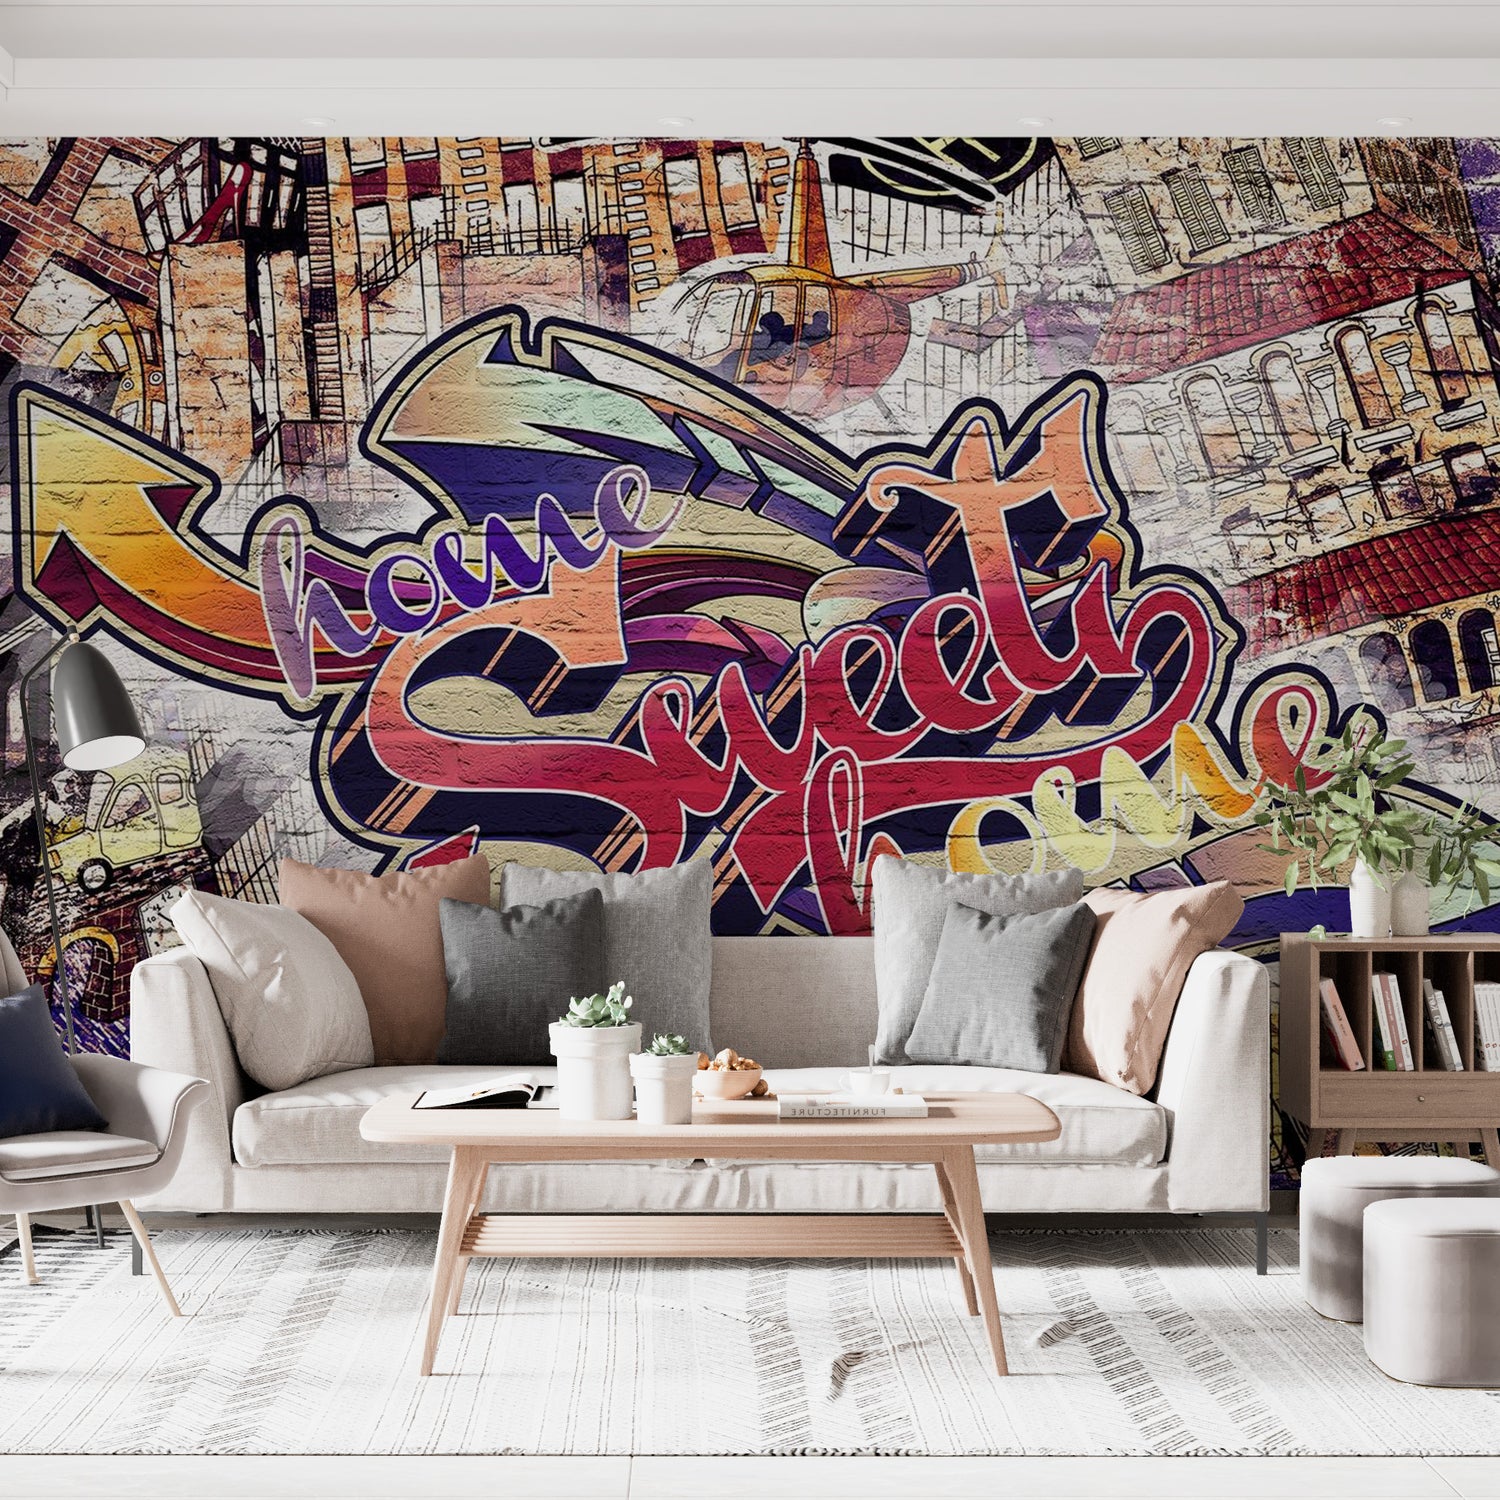 Peel & Stick Street Art Wall Mural - Home Sweet Home Graffiti - Removable Wall Decals